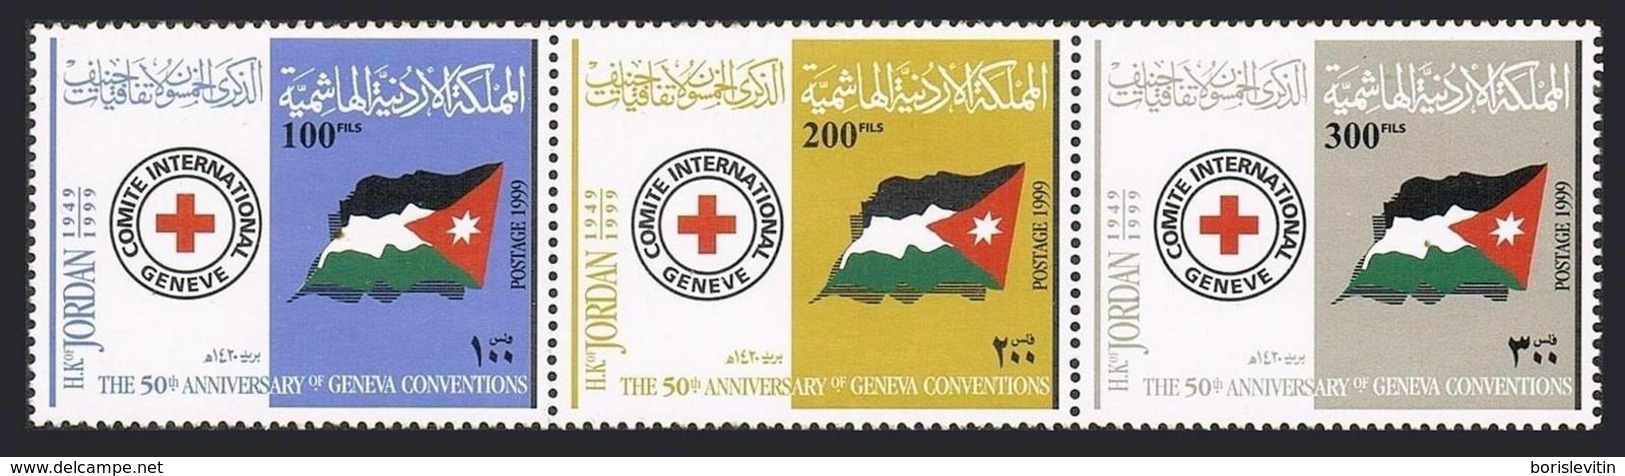 Jordan 1675 Ac Strip,MNH. Geneva Convention,50th Ann.2000.Red Cross,flag. - Jordan